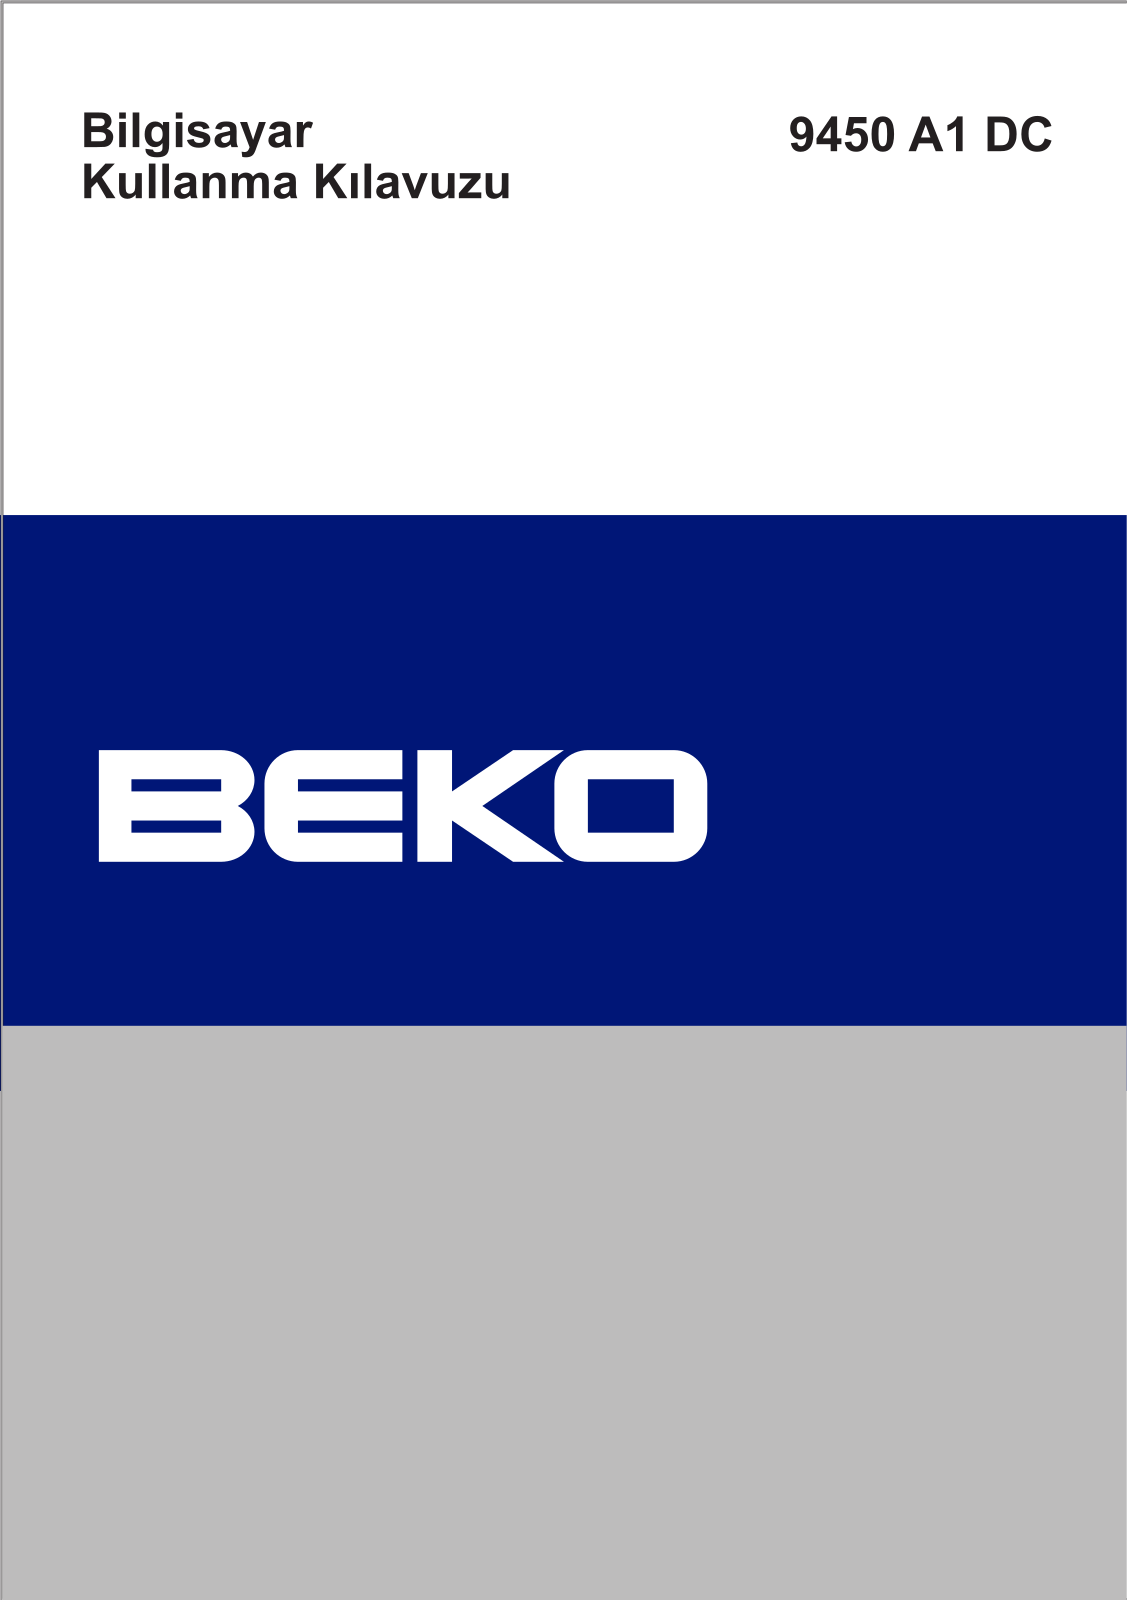 Beko 9450 A1 DC Manual